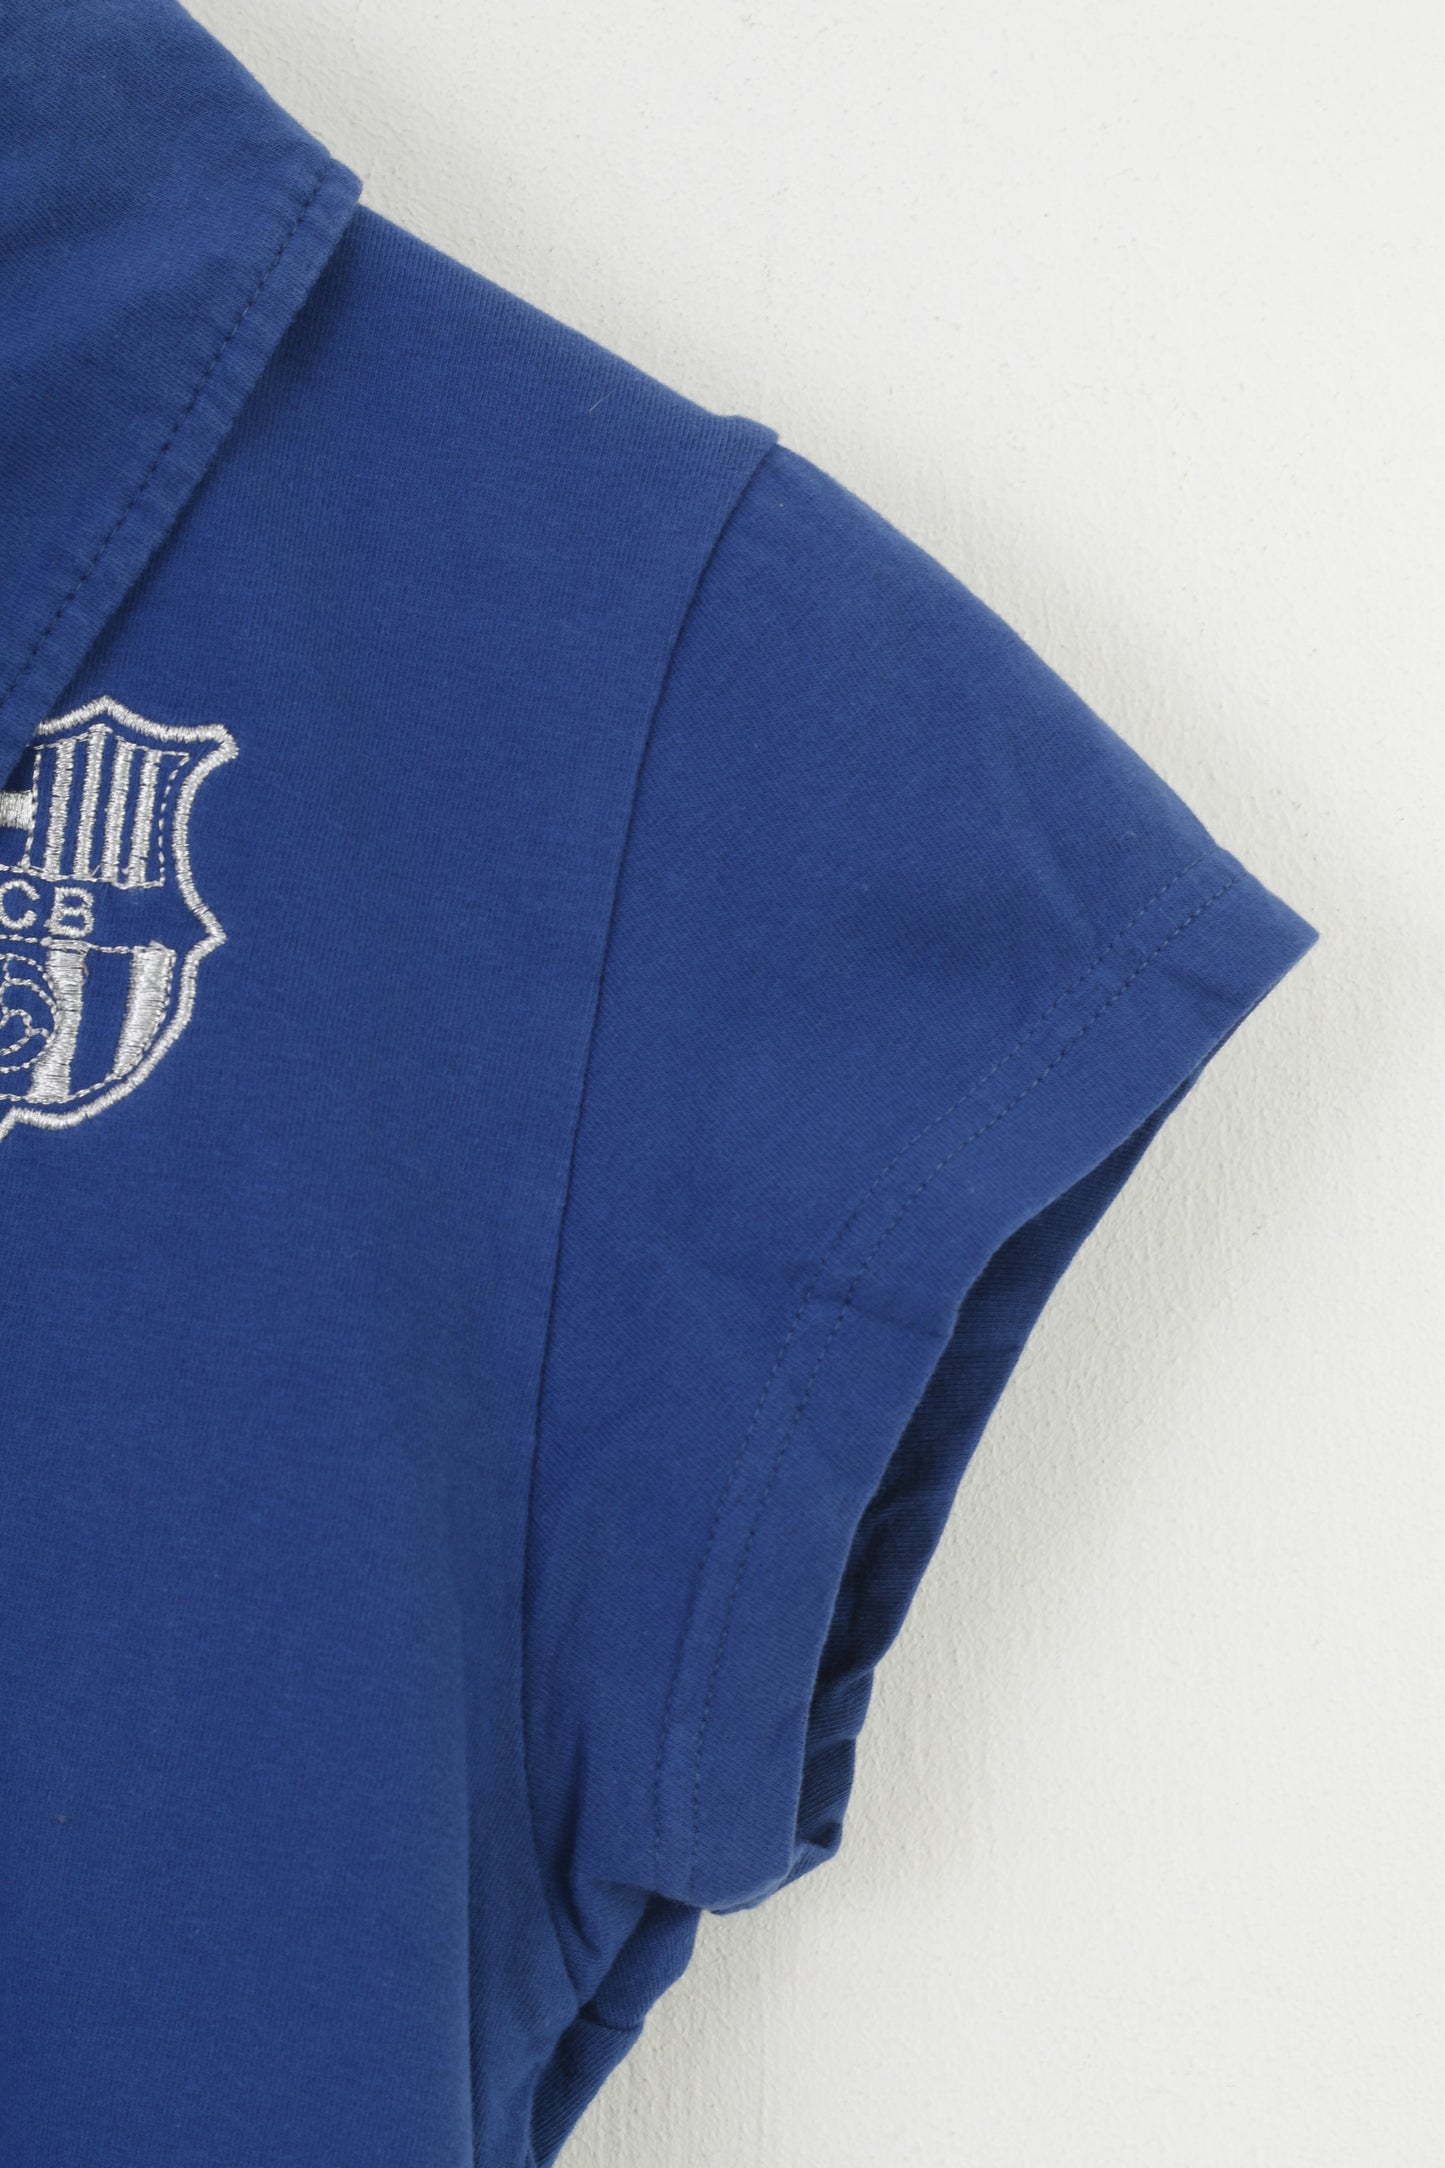 FC Barcelona Women L M Polo Shirt Graphic Blue Summer Vintage Short Sleeve Cotton Football Club FCB Top